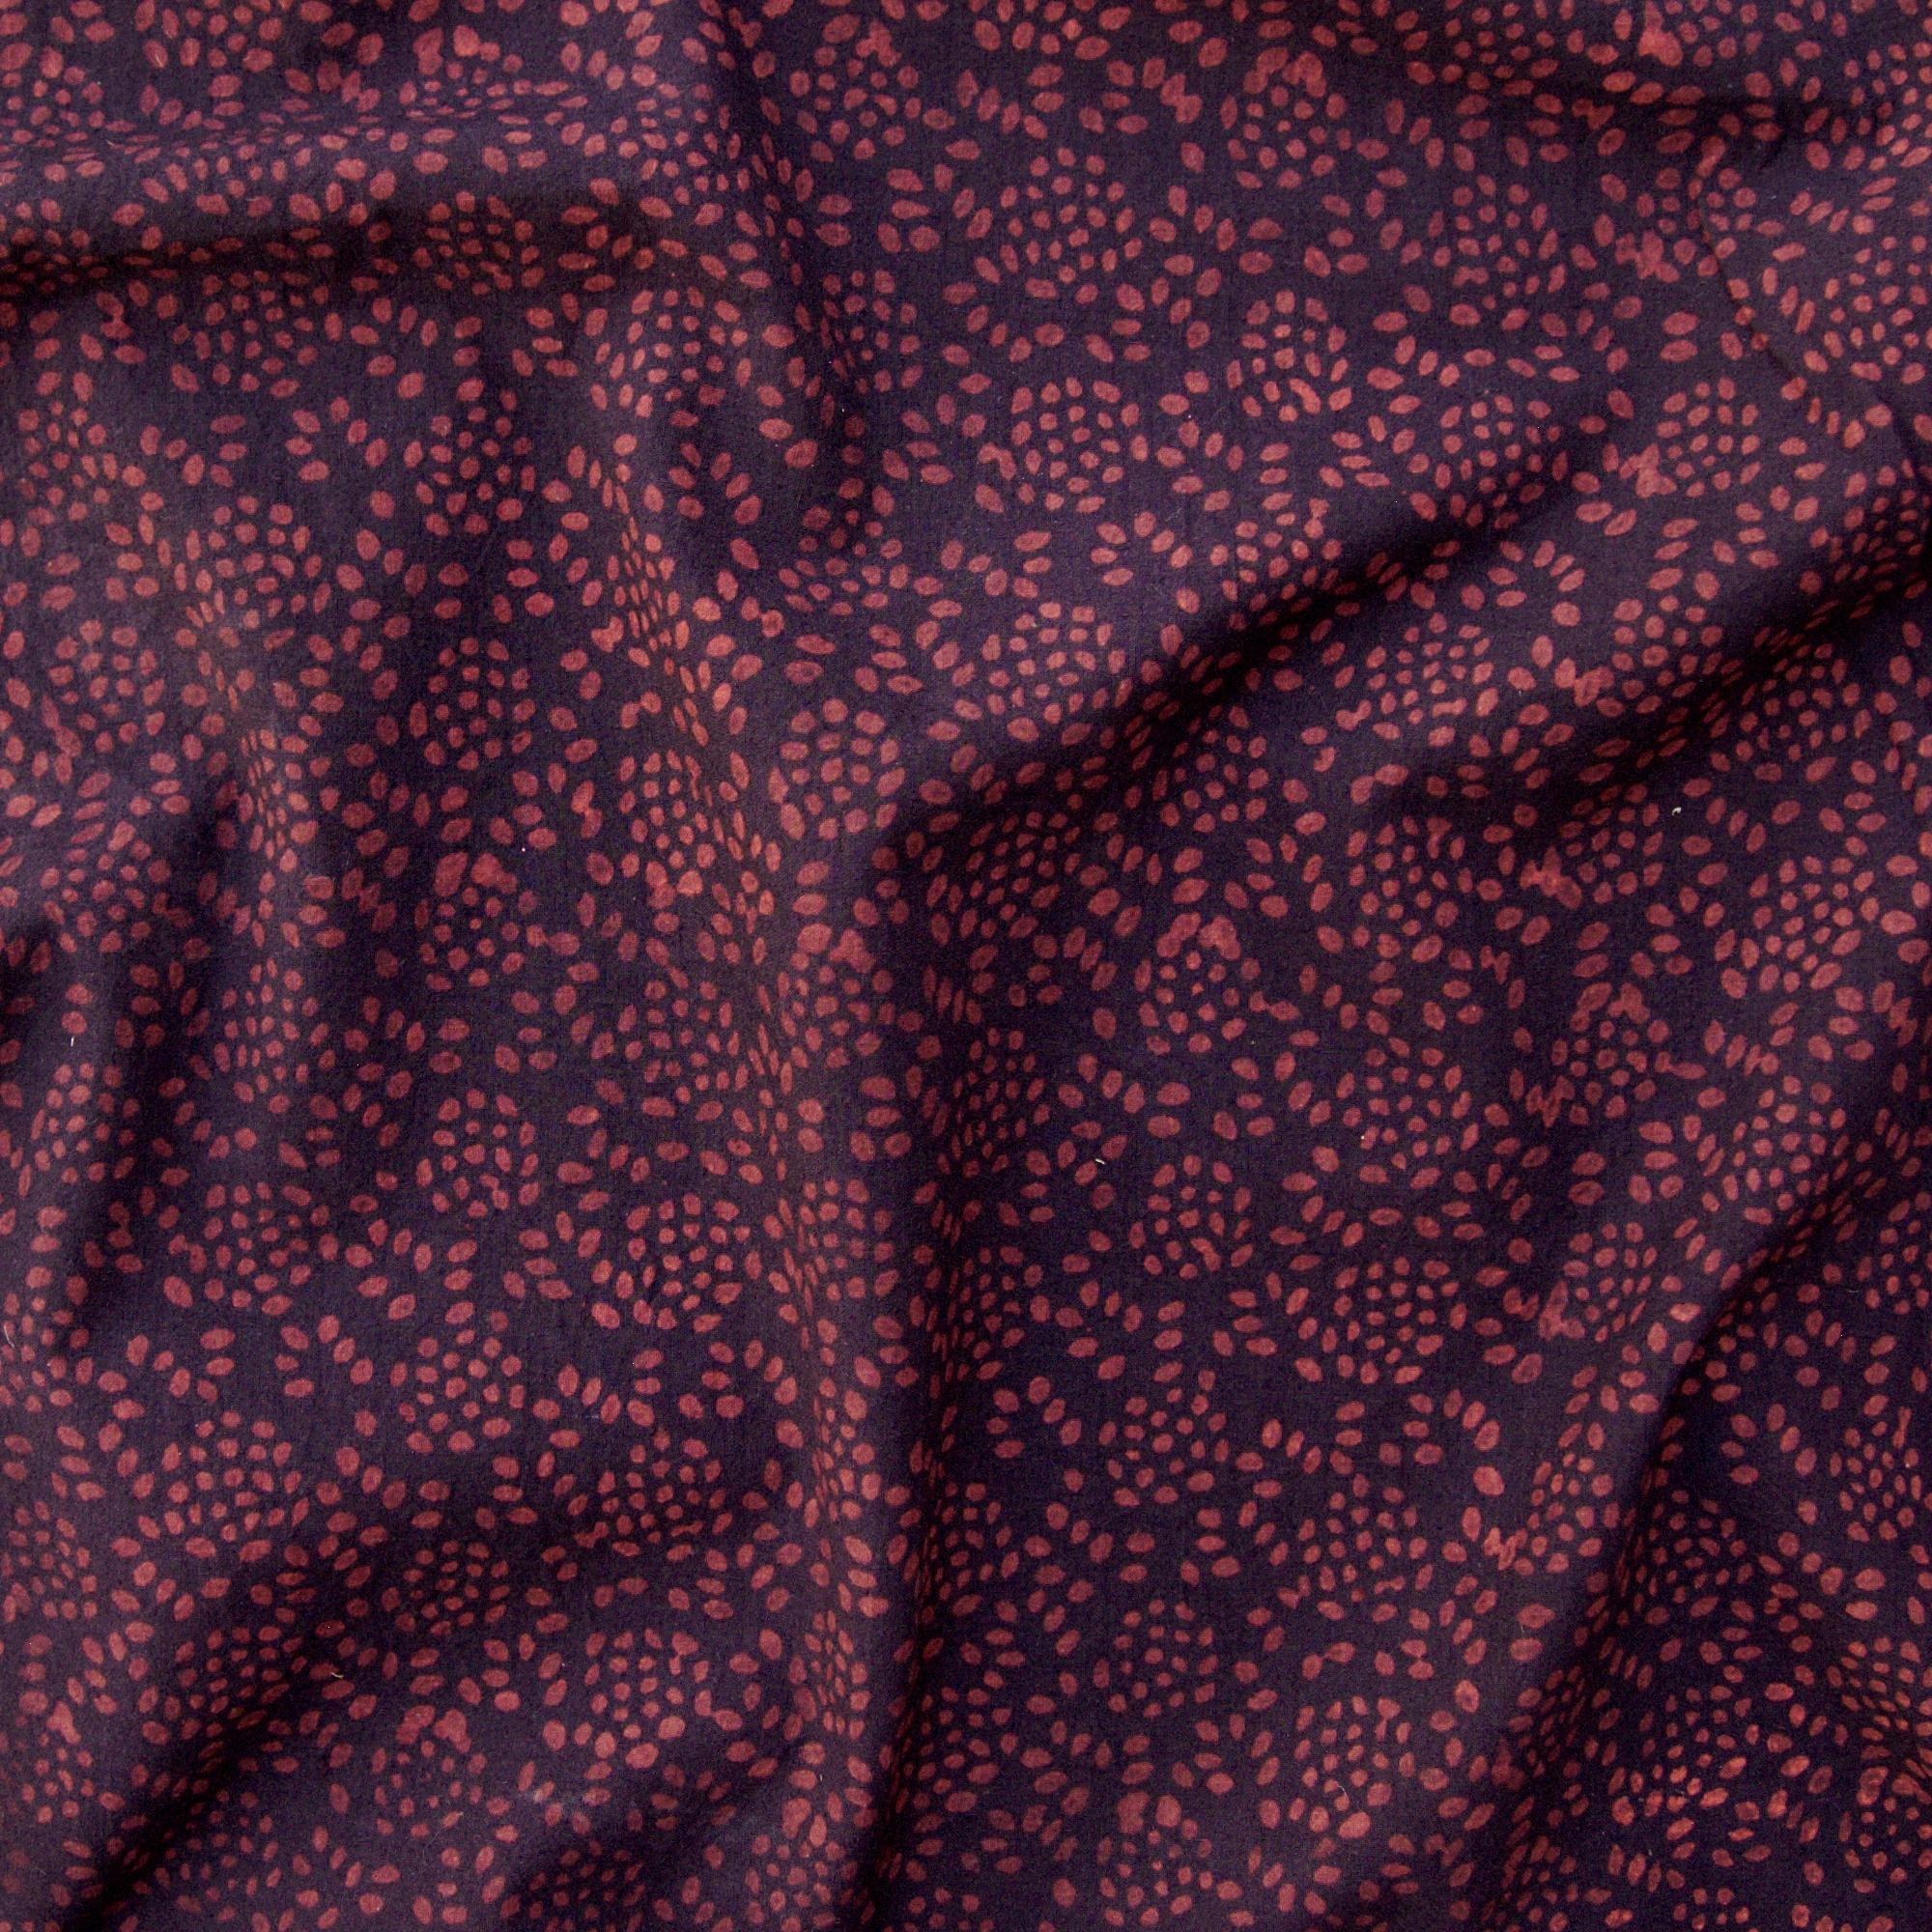 100% Block-Printed Cotton Fabric From India- Ajrak - Black Alizarin Autumn Print - Contrast